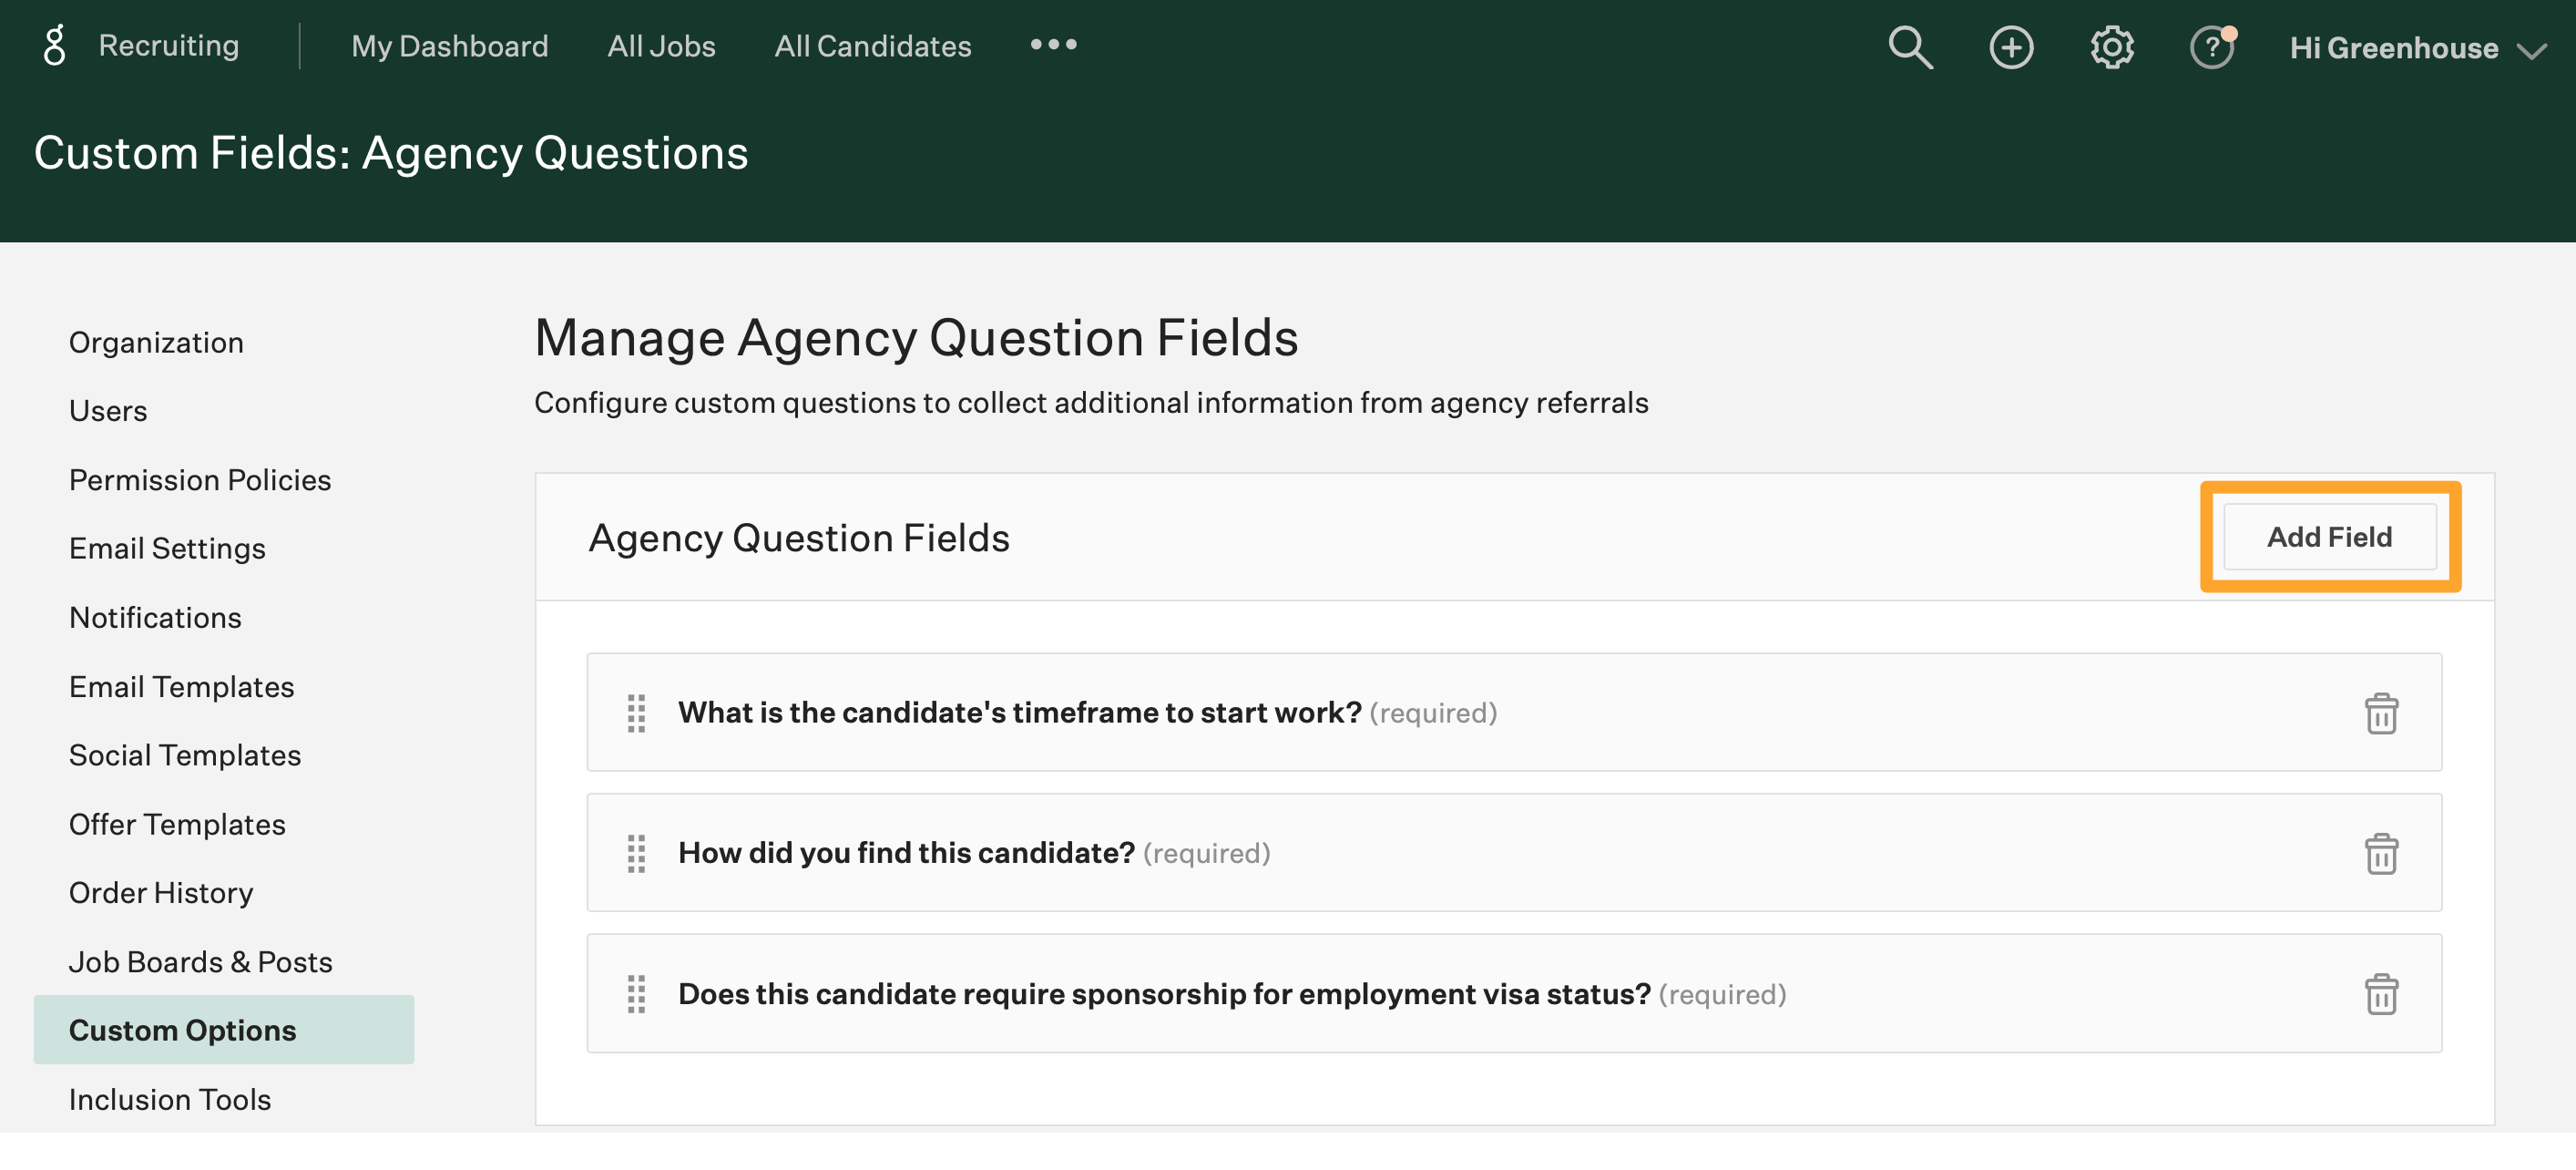 Custom_Options___Agency_Questions___Add_field.png